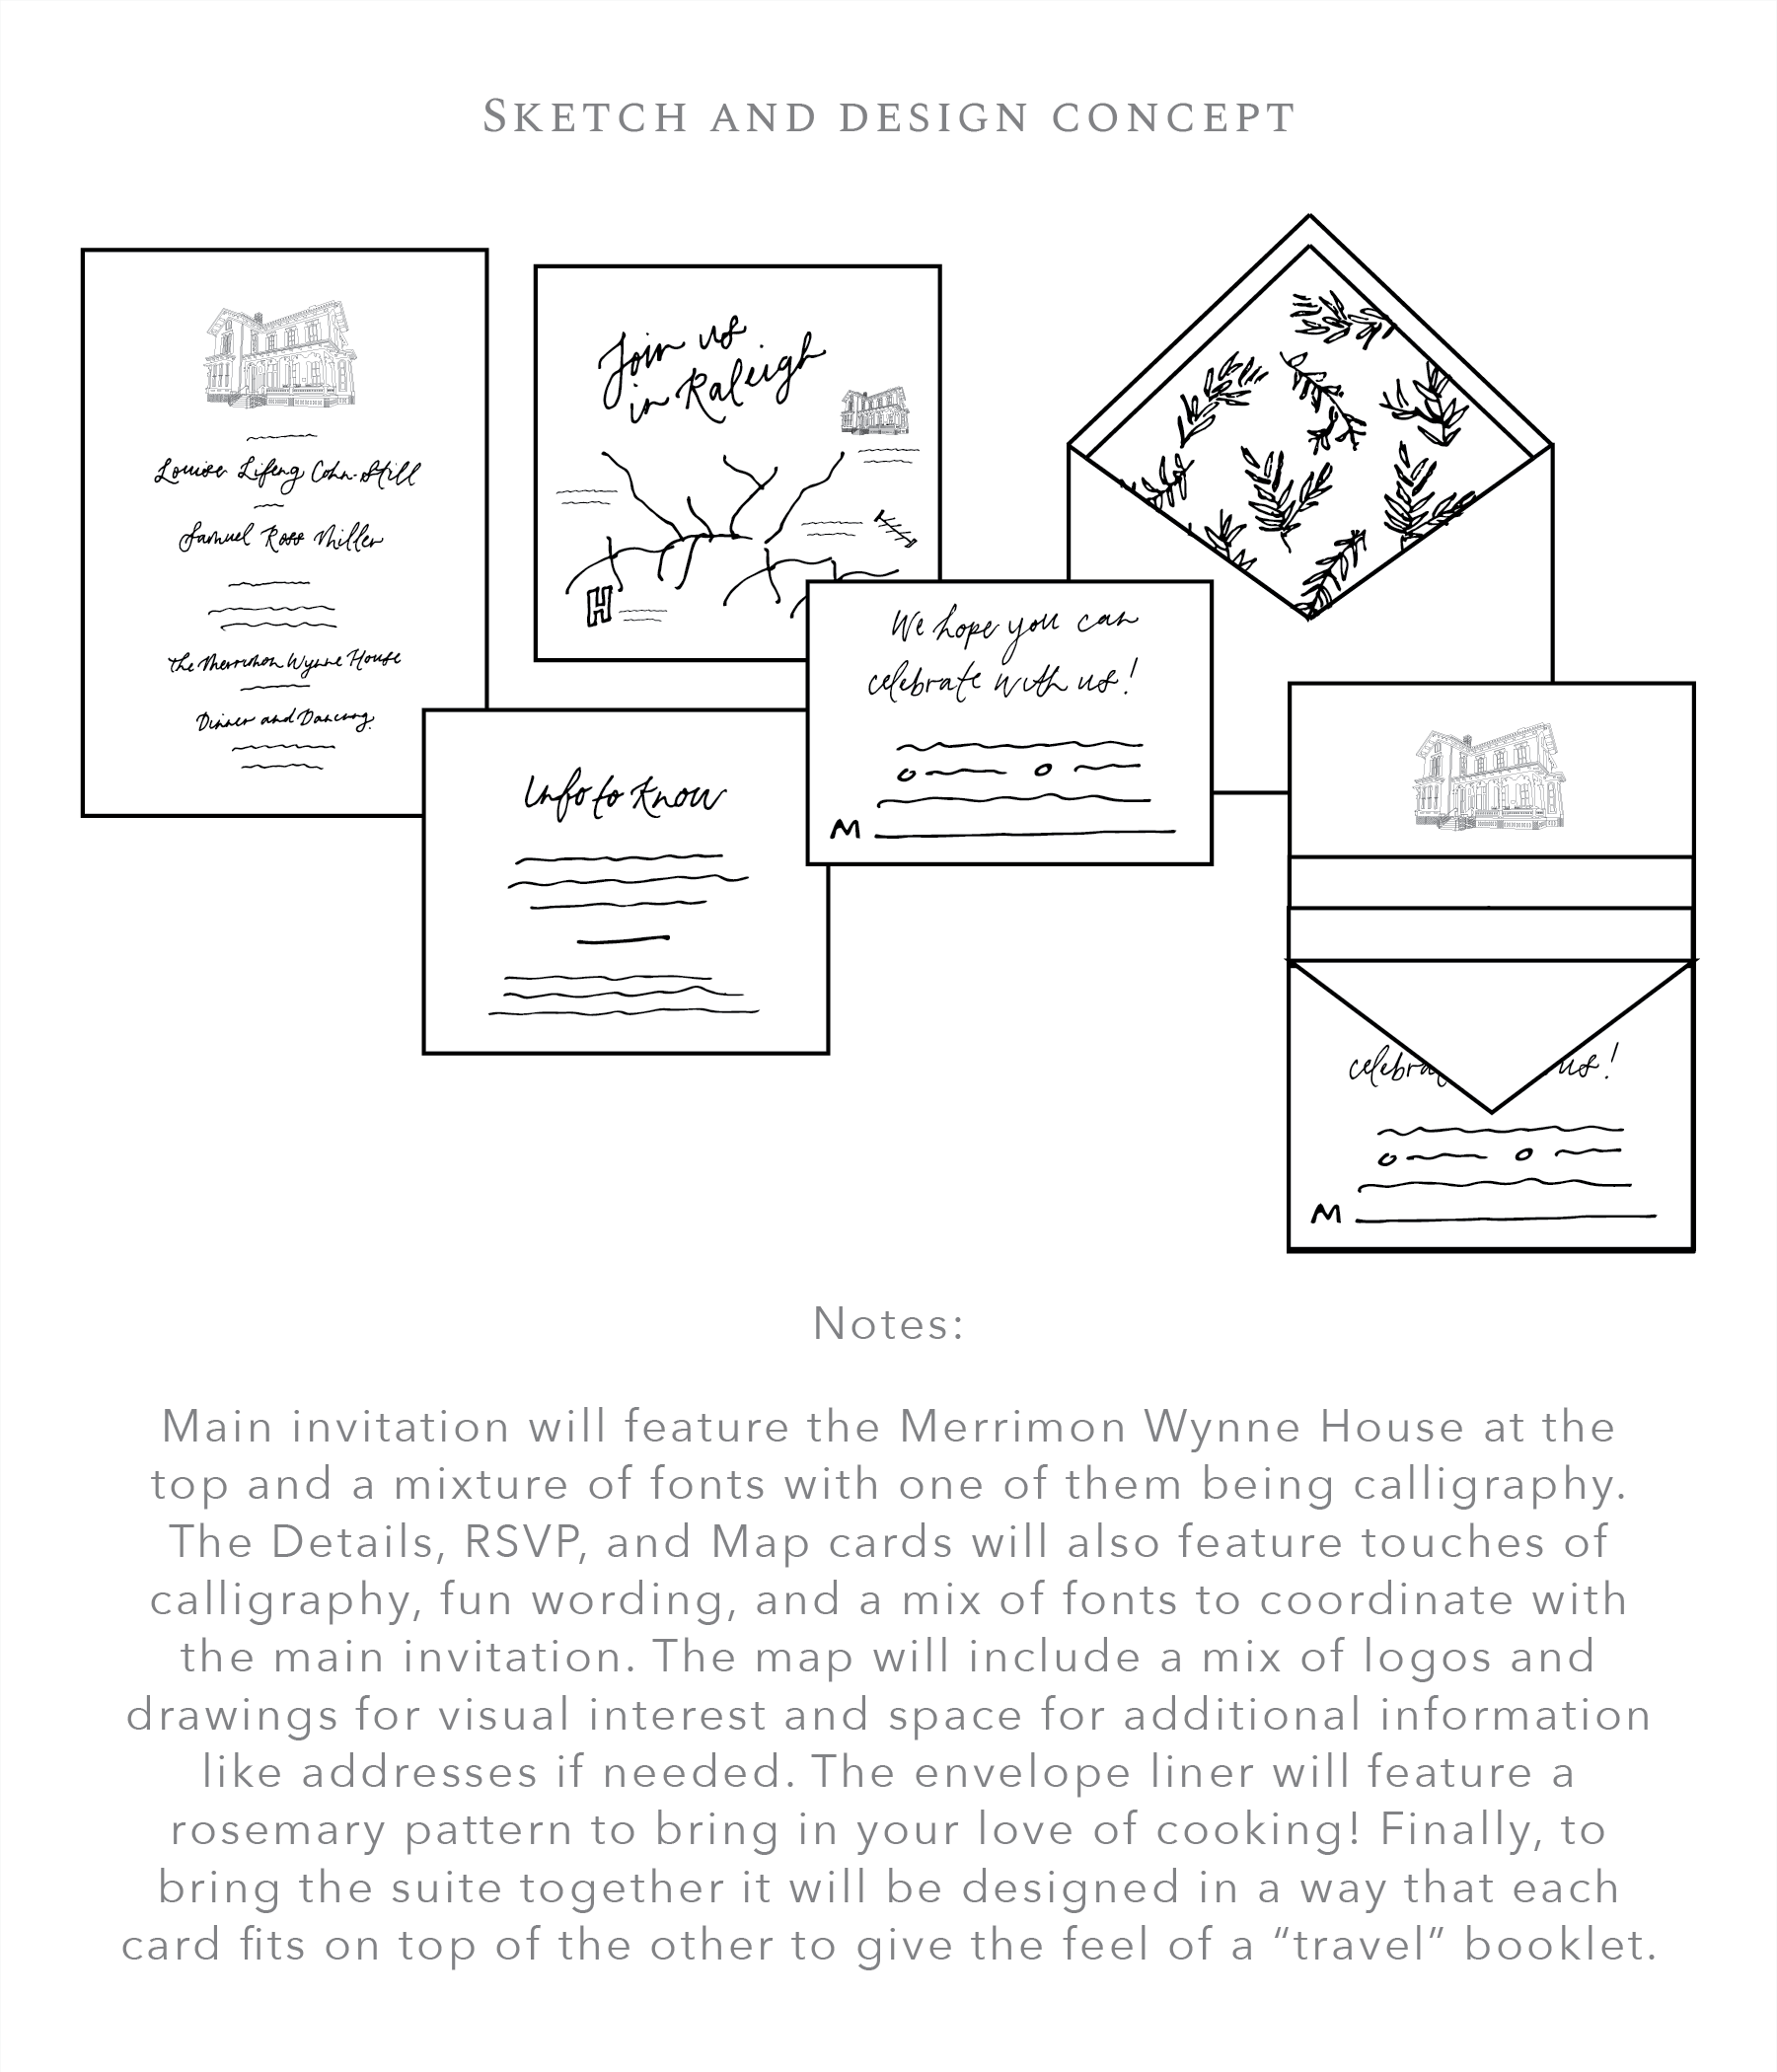 Lookbook Template - Cohn-Still_Sketch and Design Concept.png